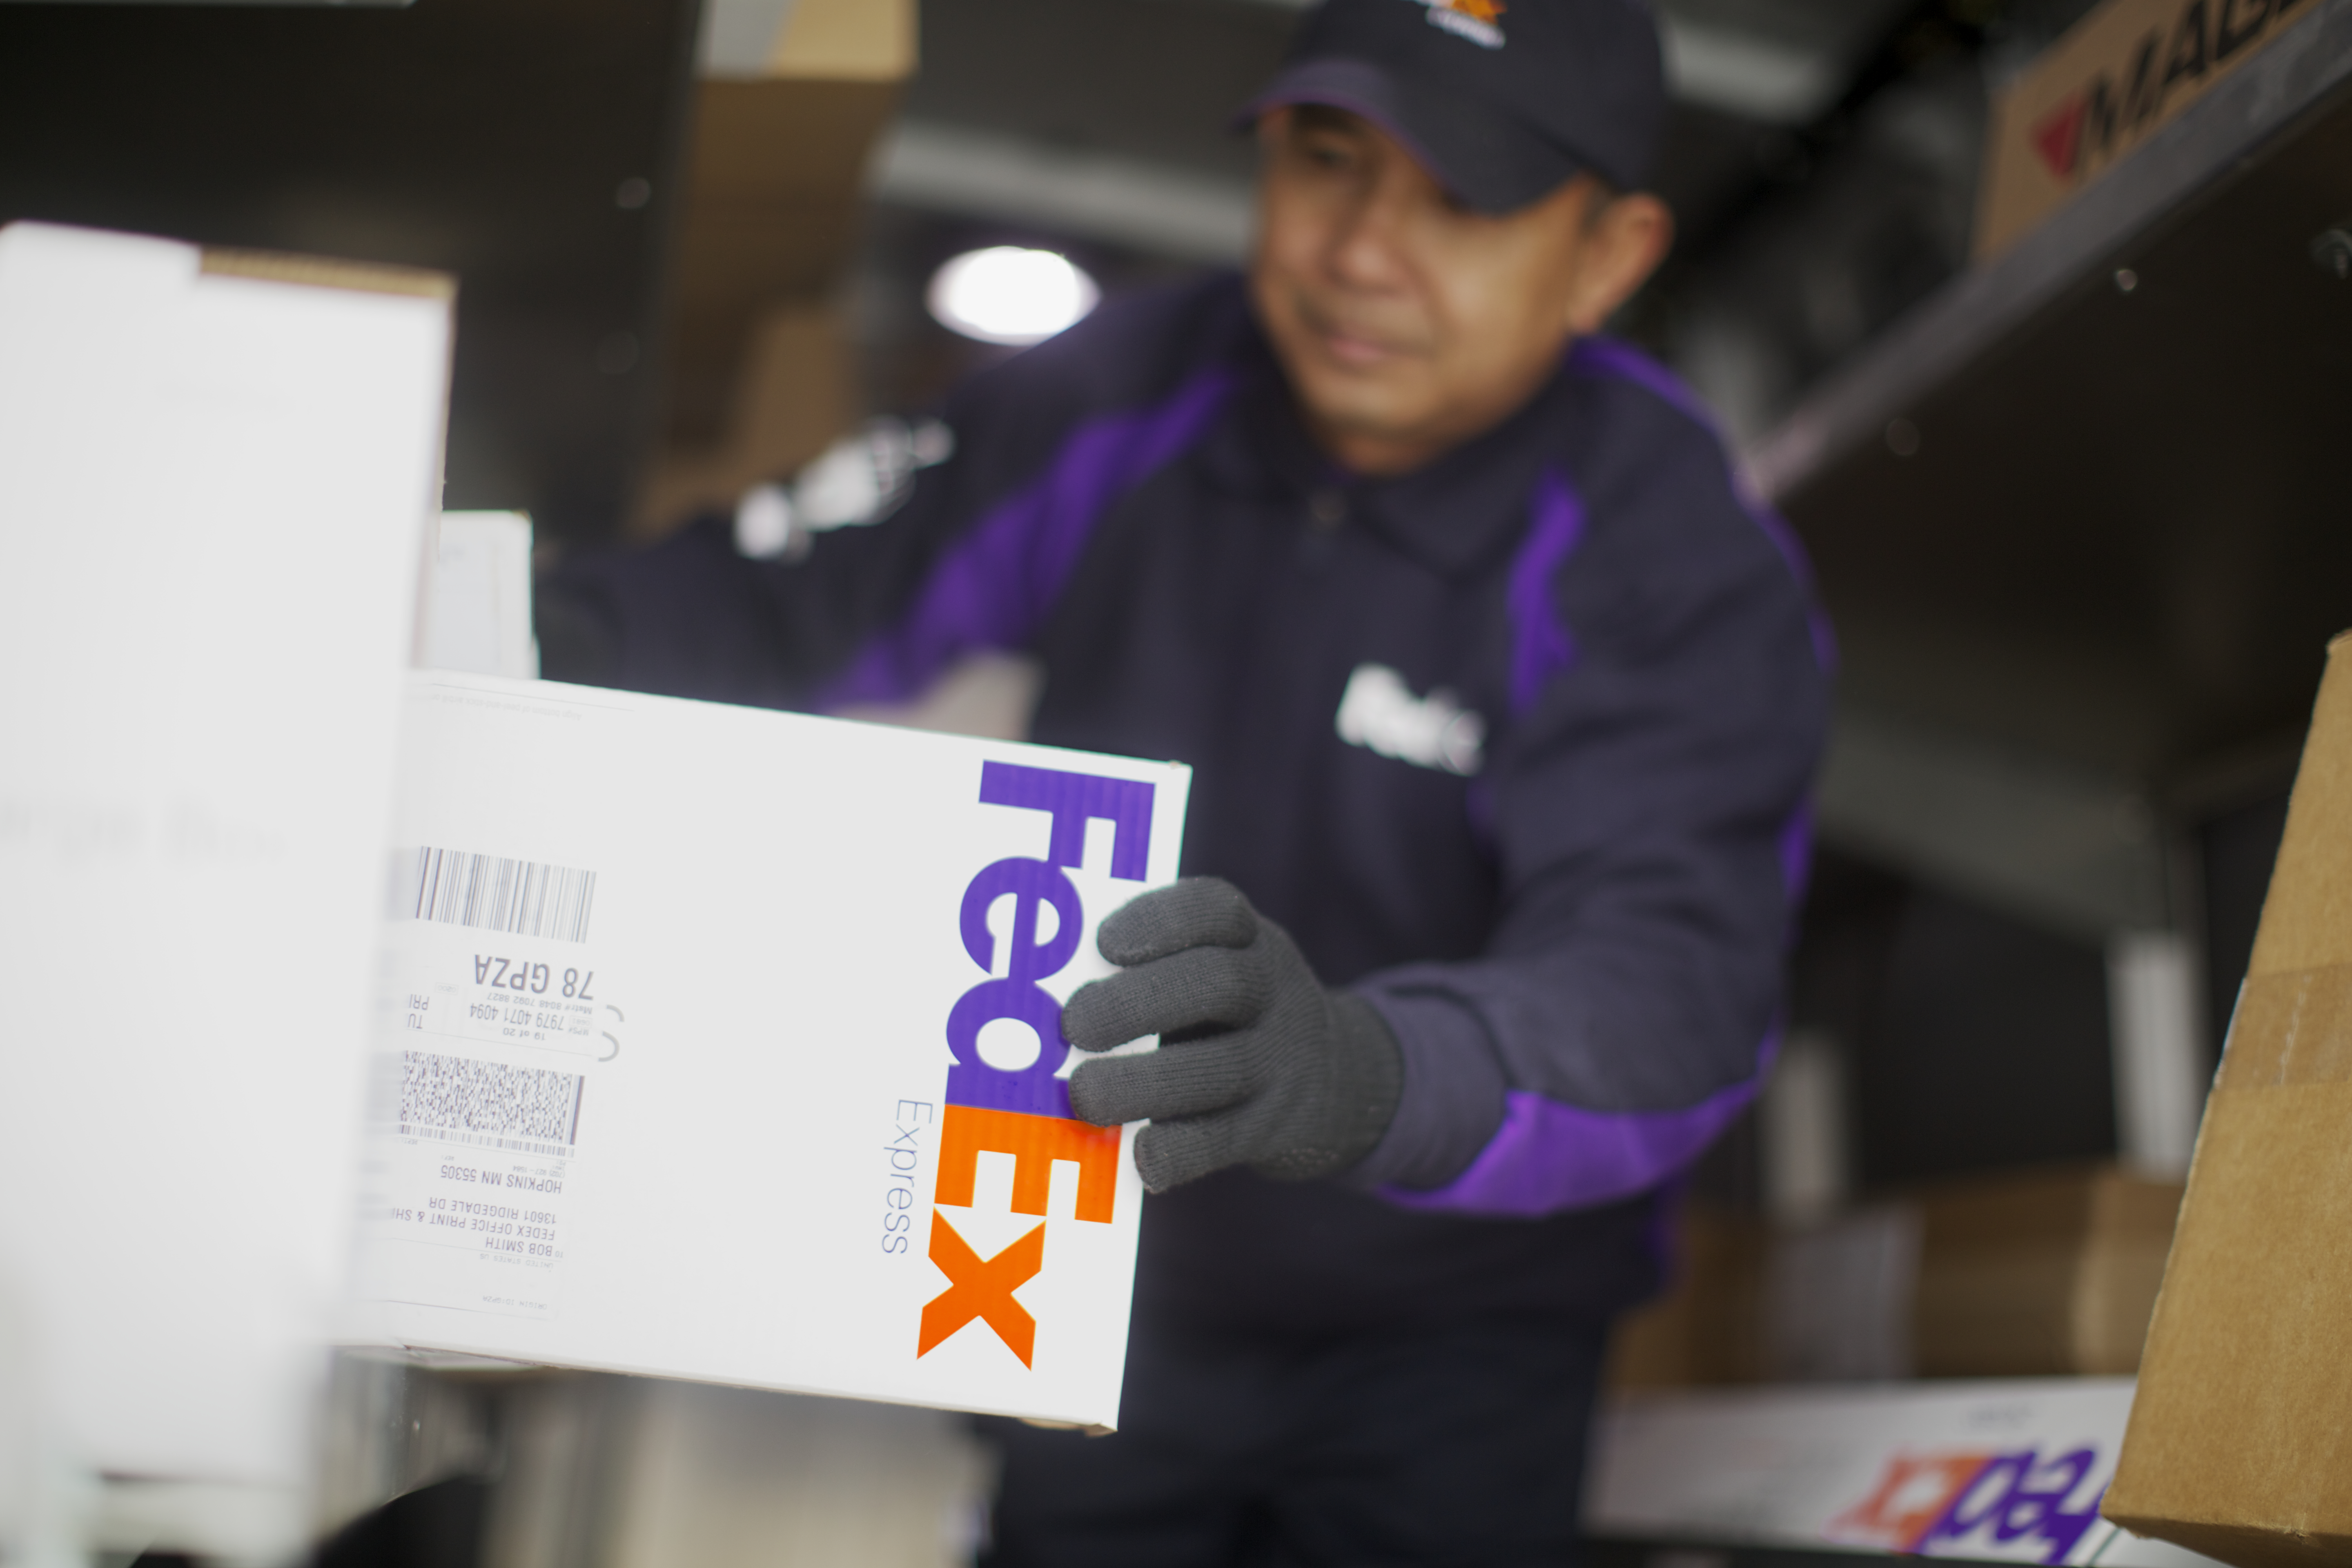 FedEx parcel handler